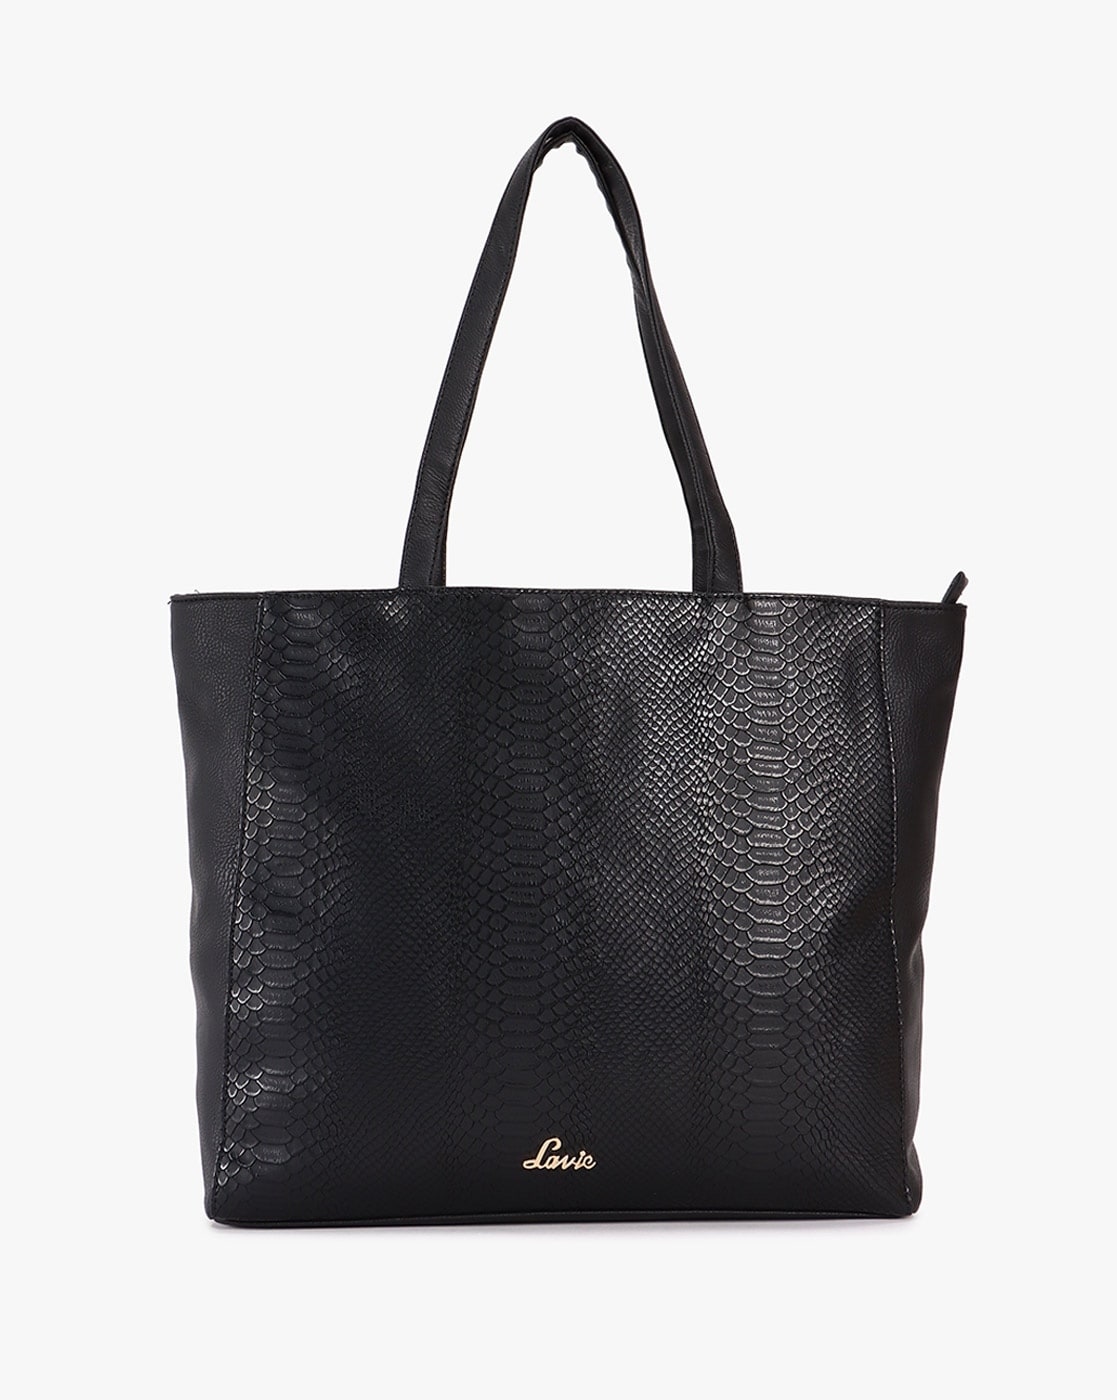 Esdona Plain Ladies Grey PU Leather Handbag at Rs 550/bag in New Delhi |  ID: 21610356091